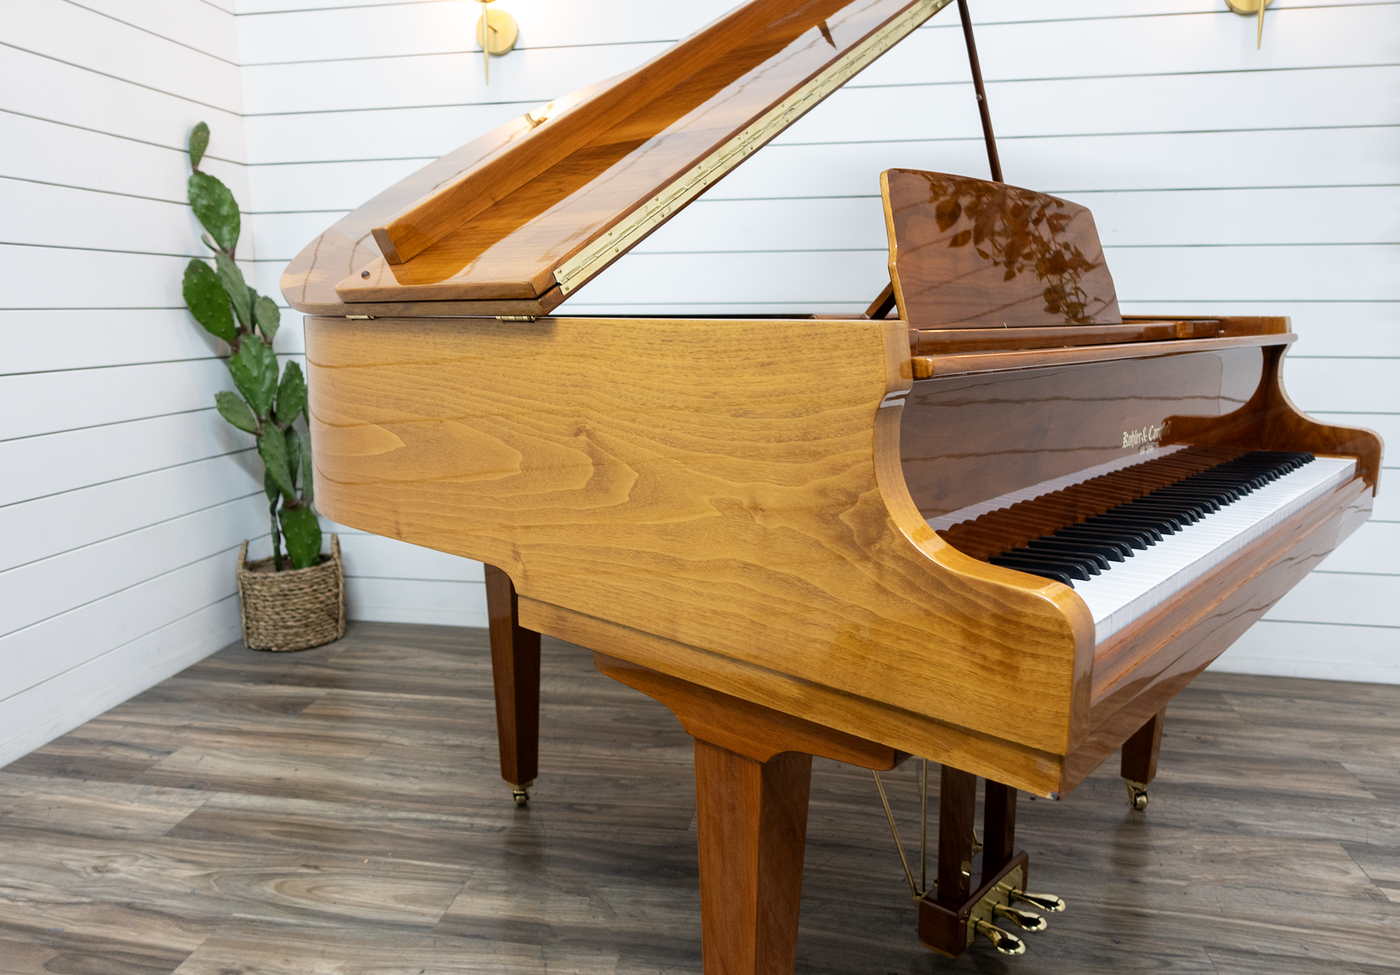 Kohler & Campbell SKG-400 Petite Baby Grand Piano